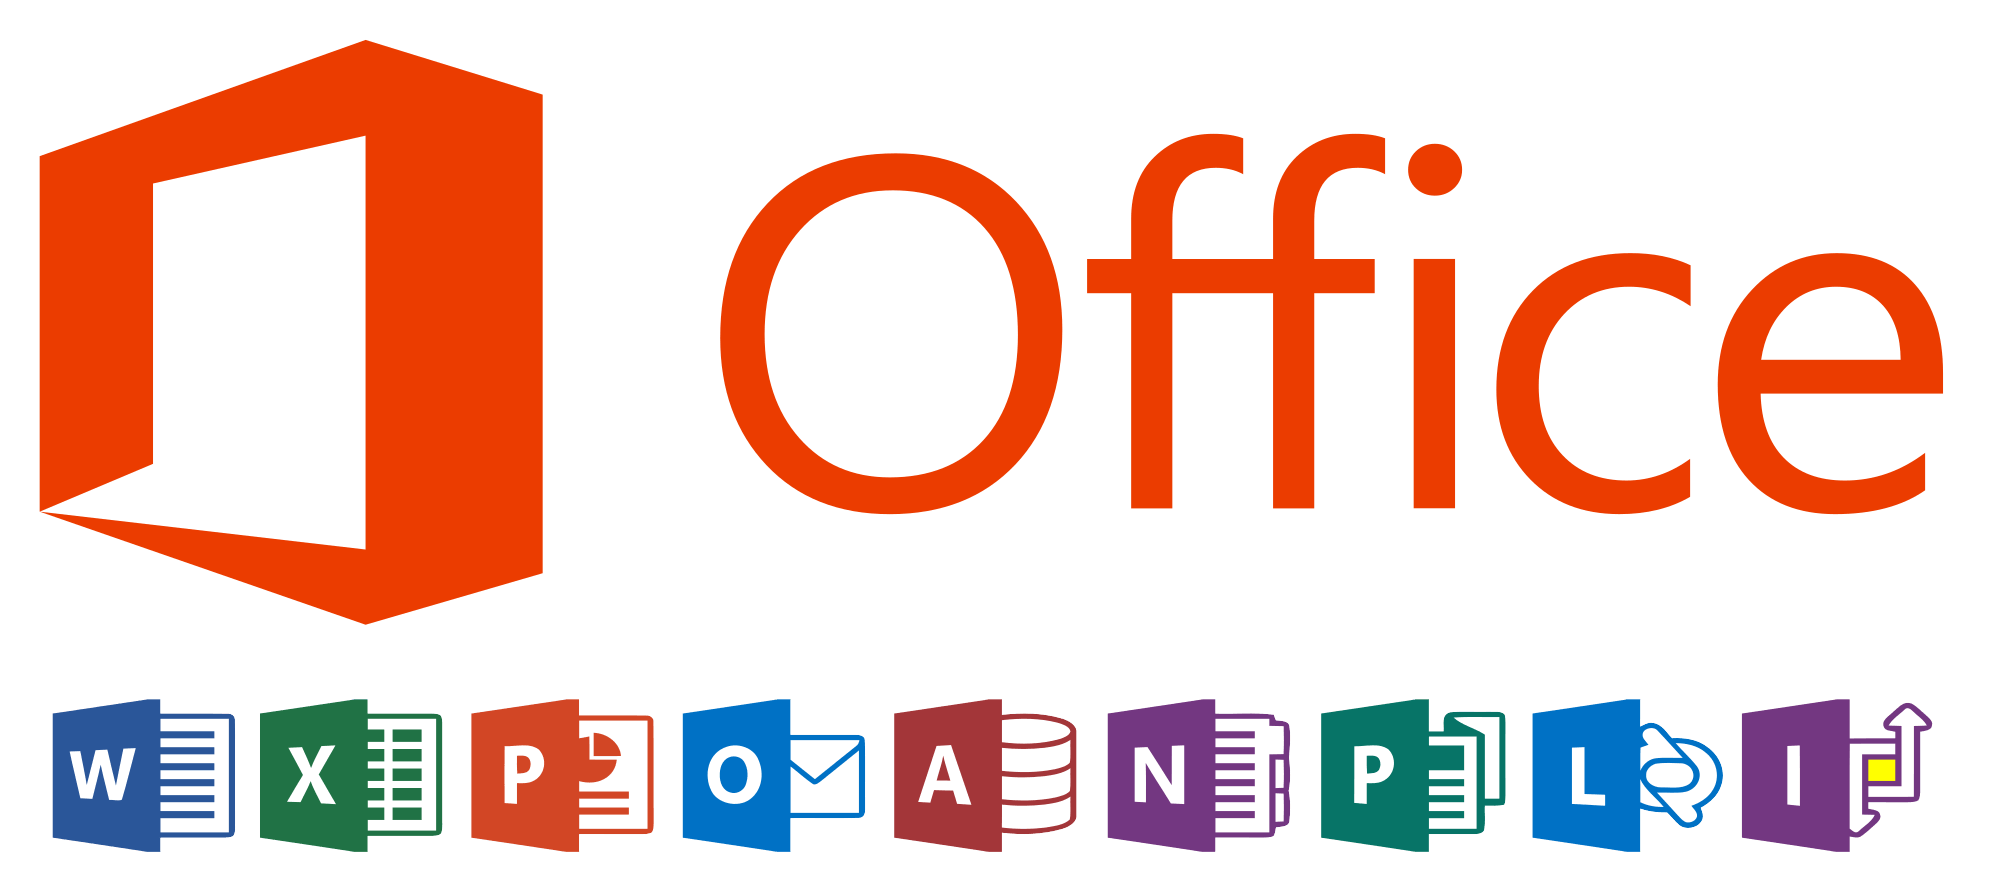 Office Logo - File:2018 Microsoft Office logos.svg - Wikimedia Commons